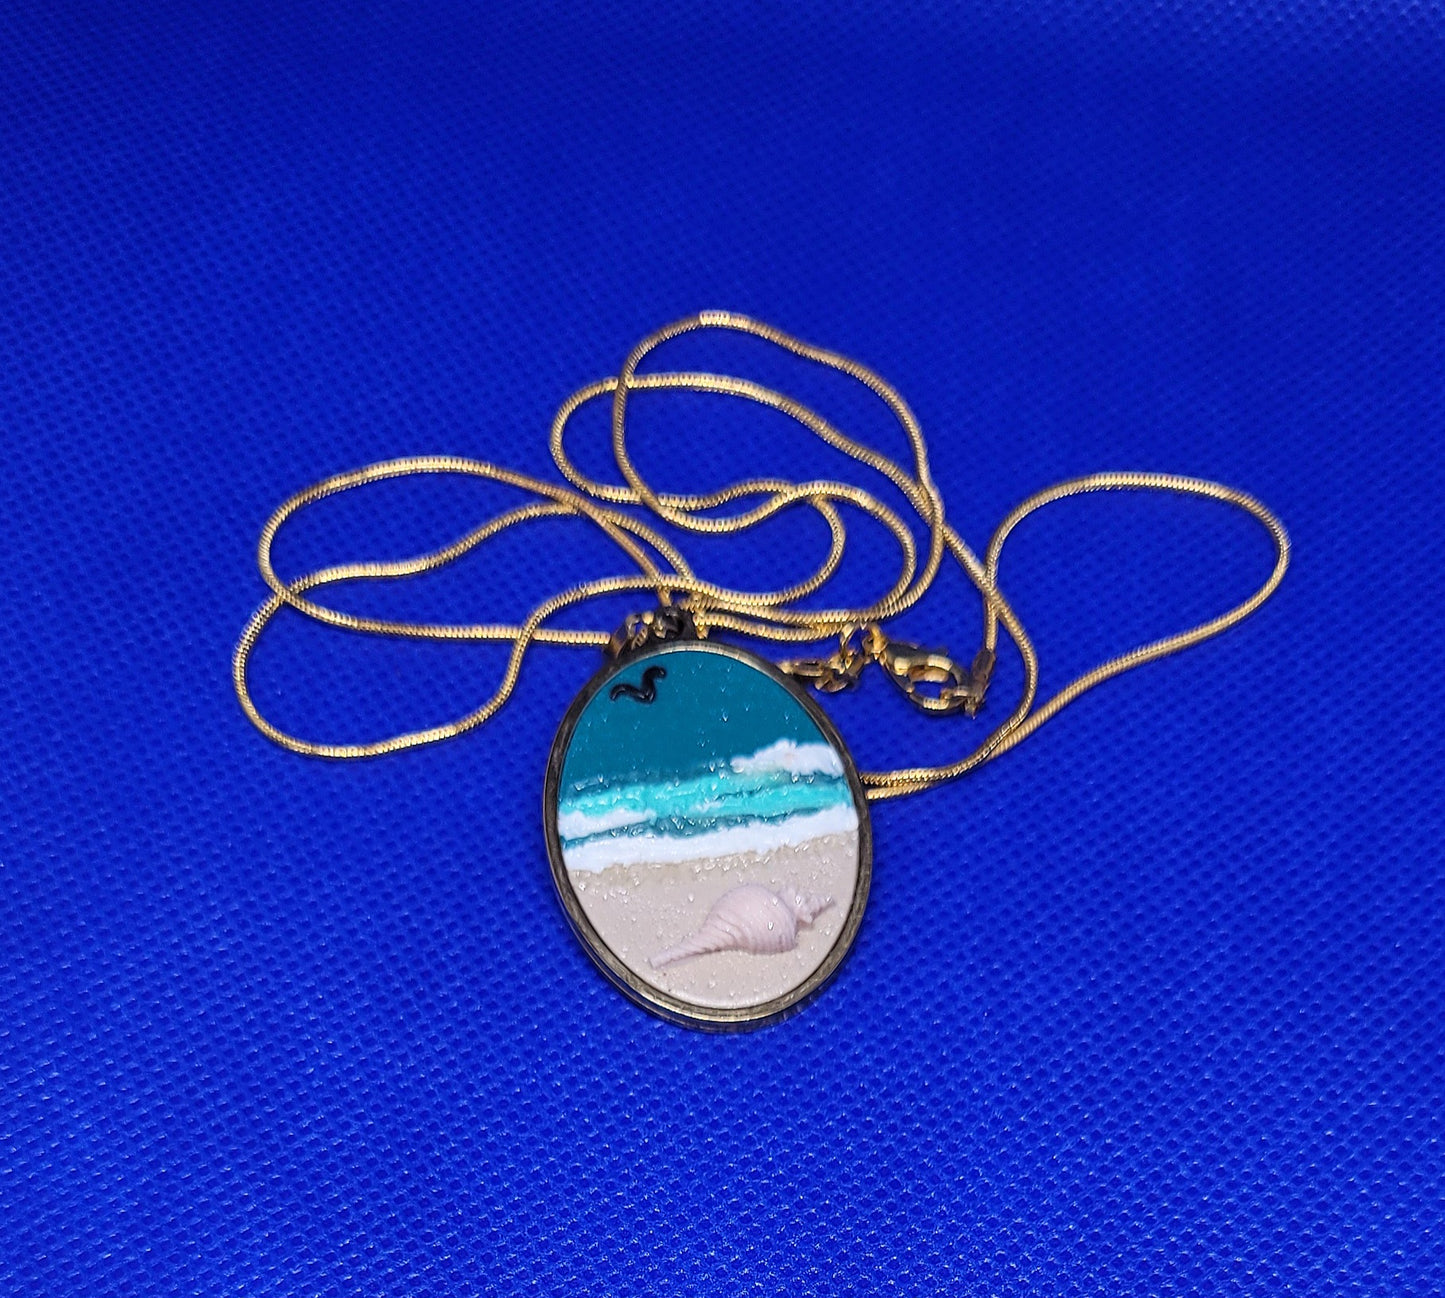 Beach pendant| Beach themed necklace| Gift for beach lover